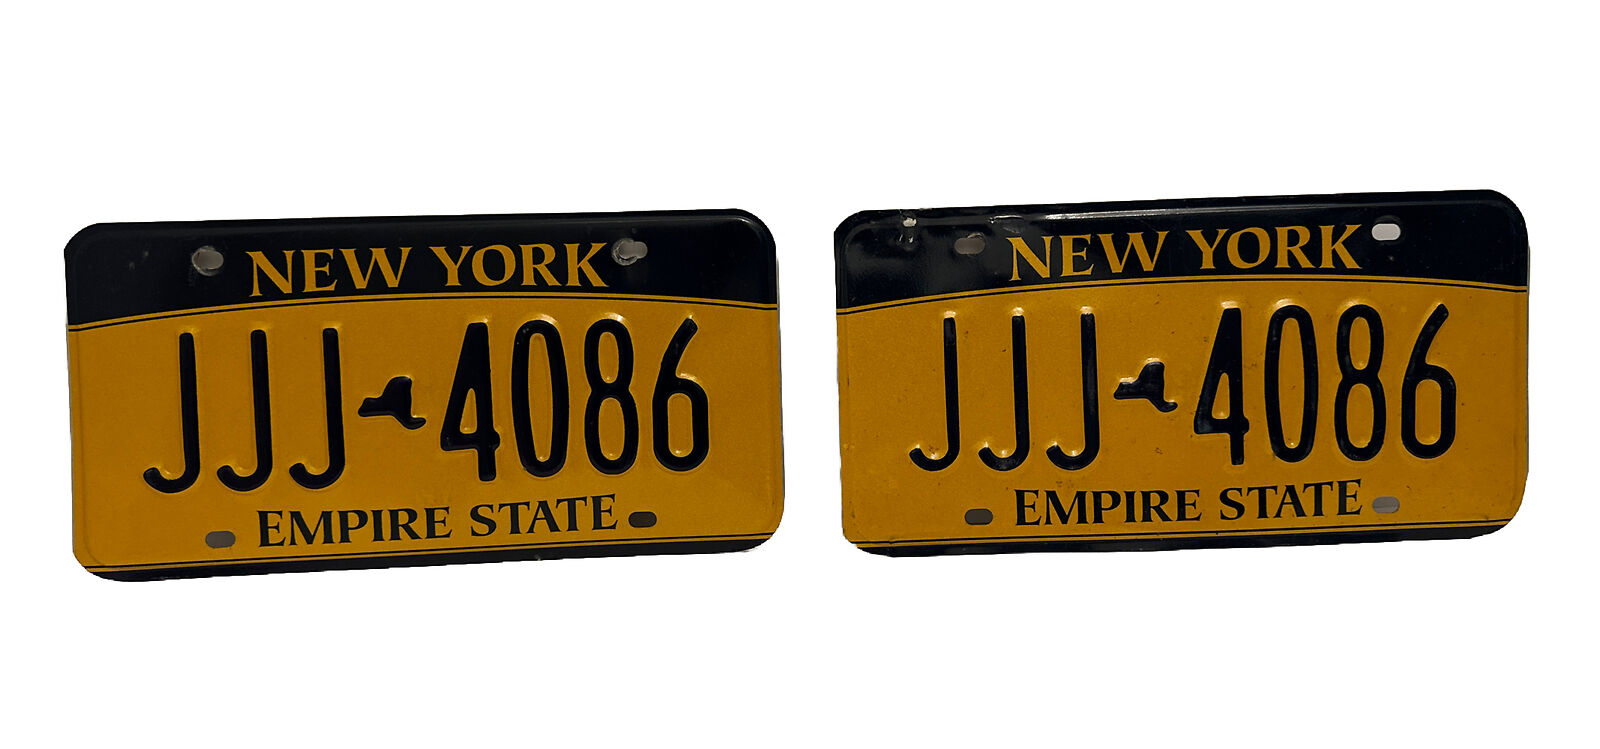 NEW YORK EMPIRE STATE  LICENSE PLATE PAIR - BLUE/GOLD - JJJ 4086